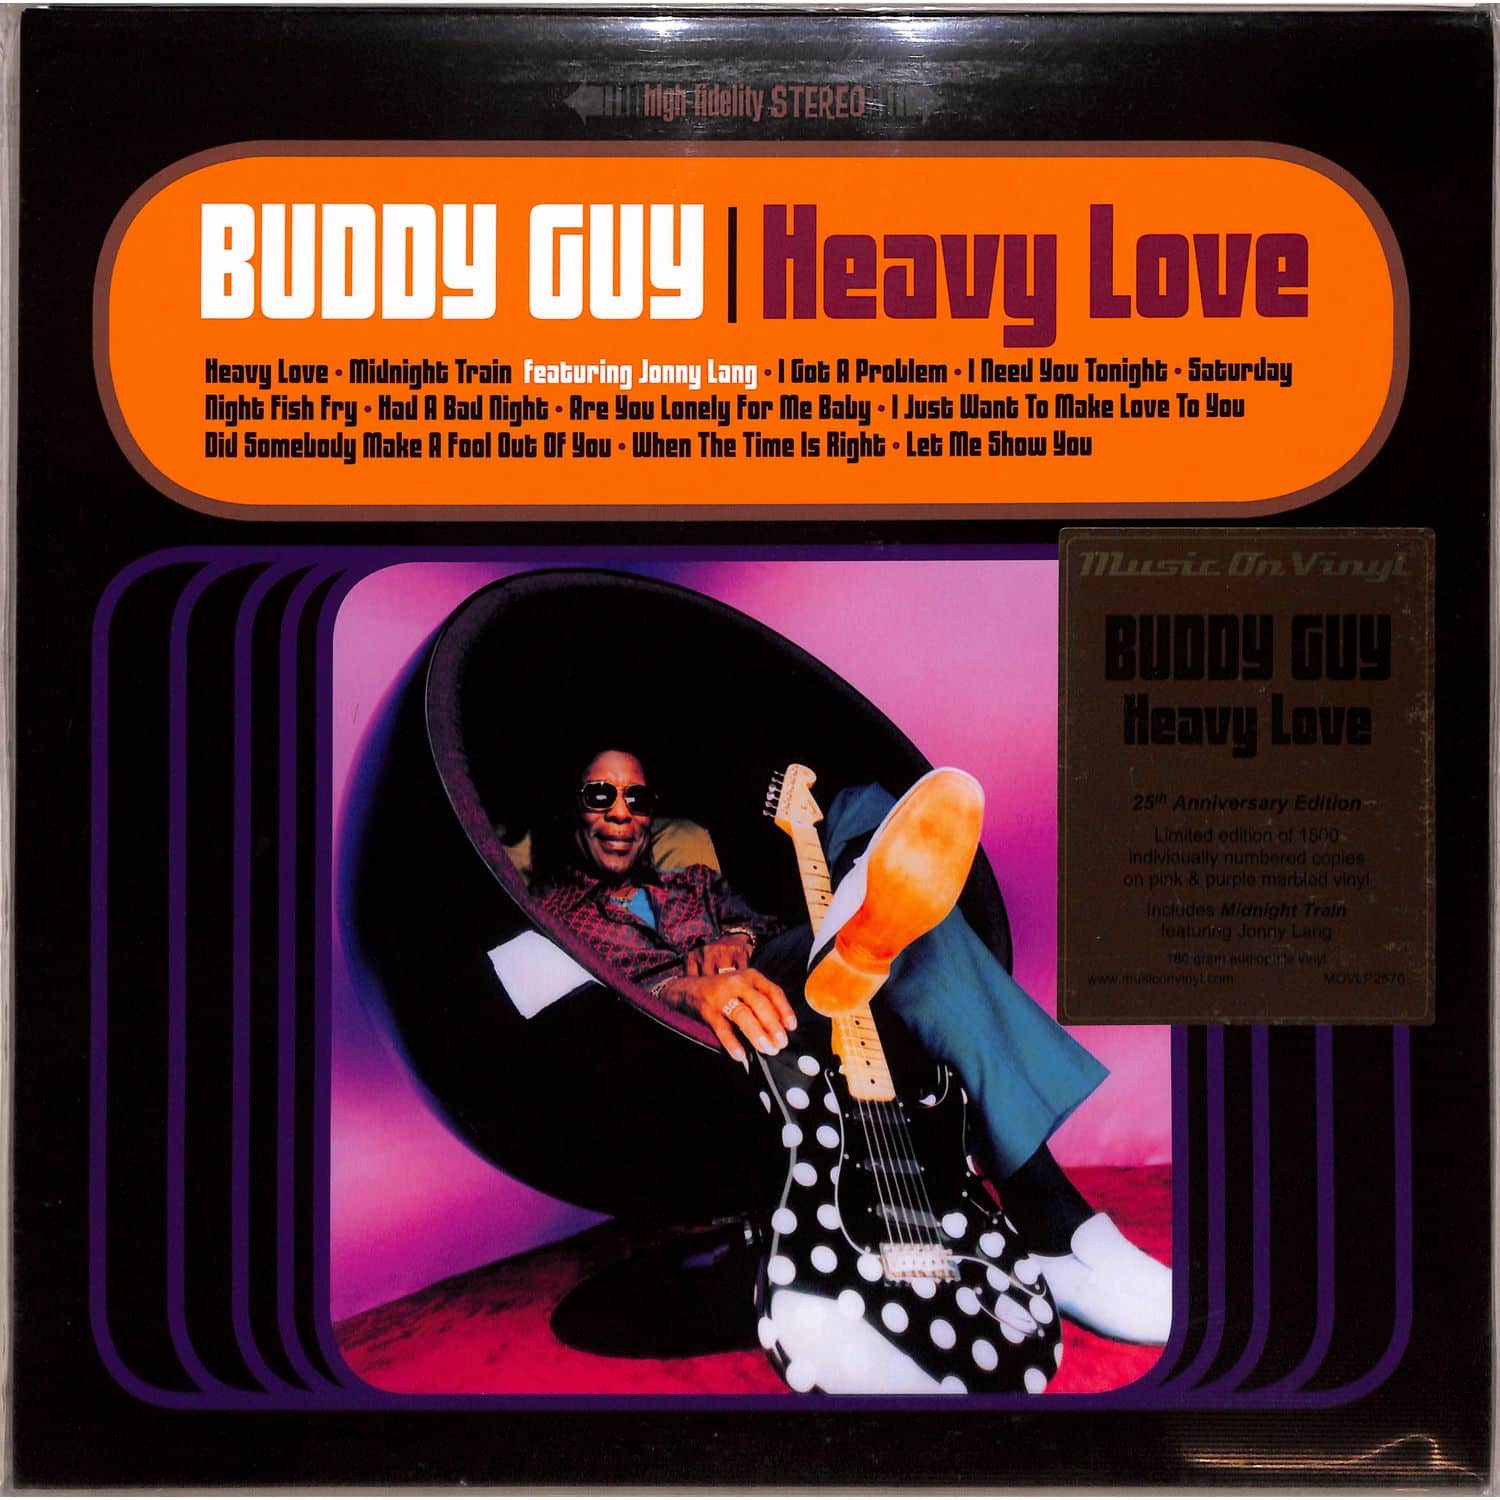 Buddy Guy - HEAVY LOVE 